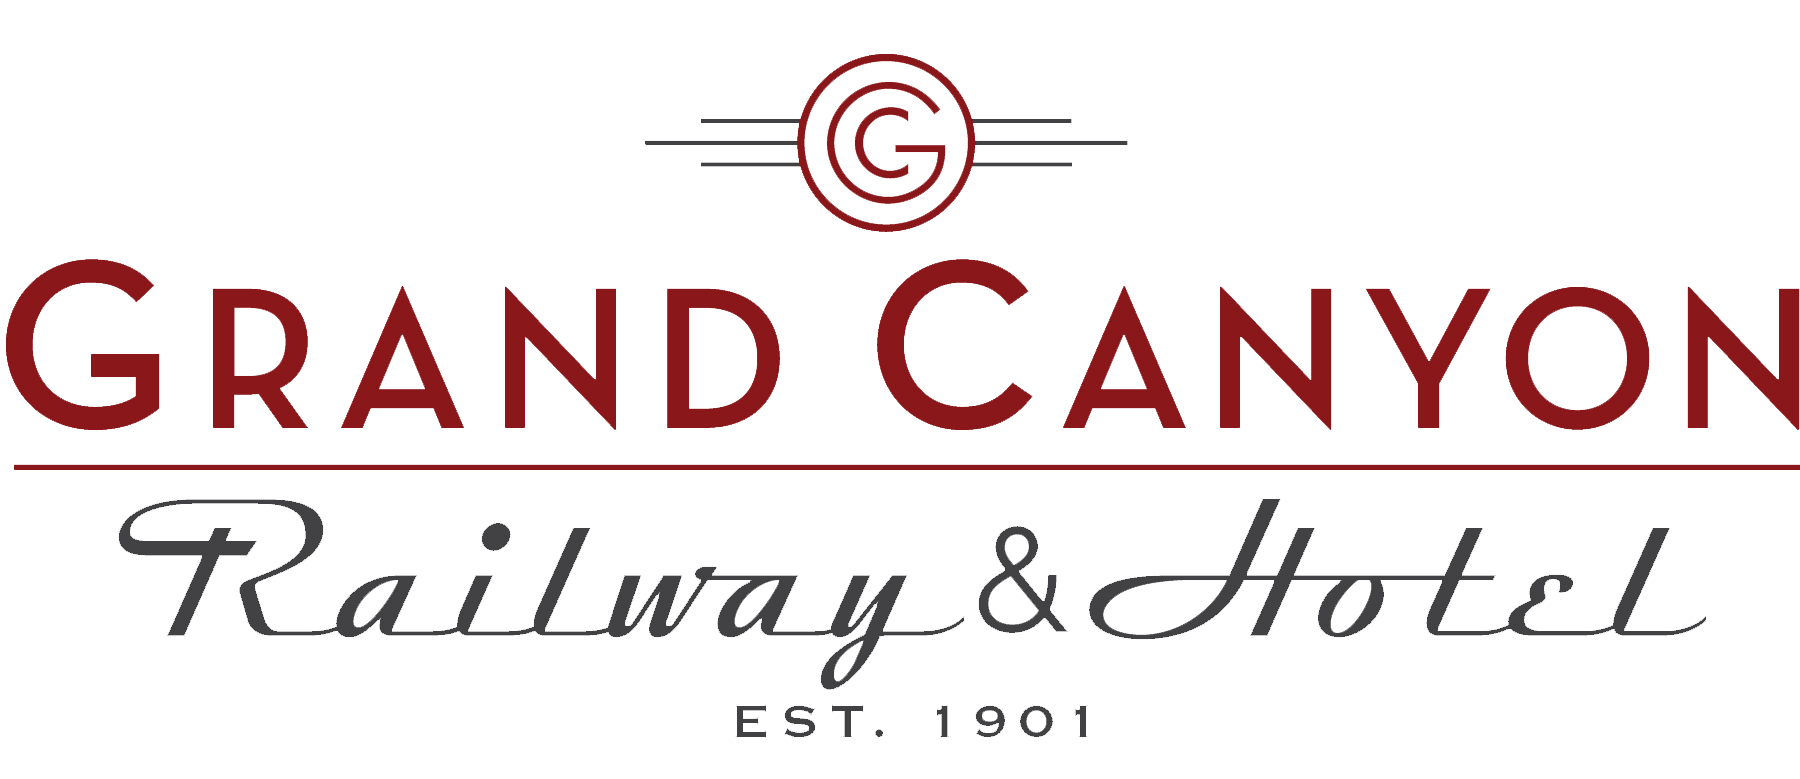 Grand Canyon Railway & Hotel